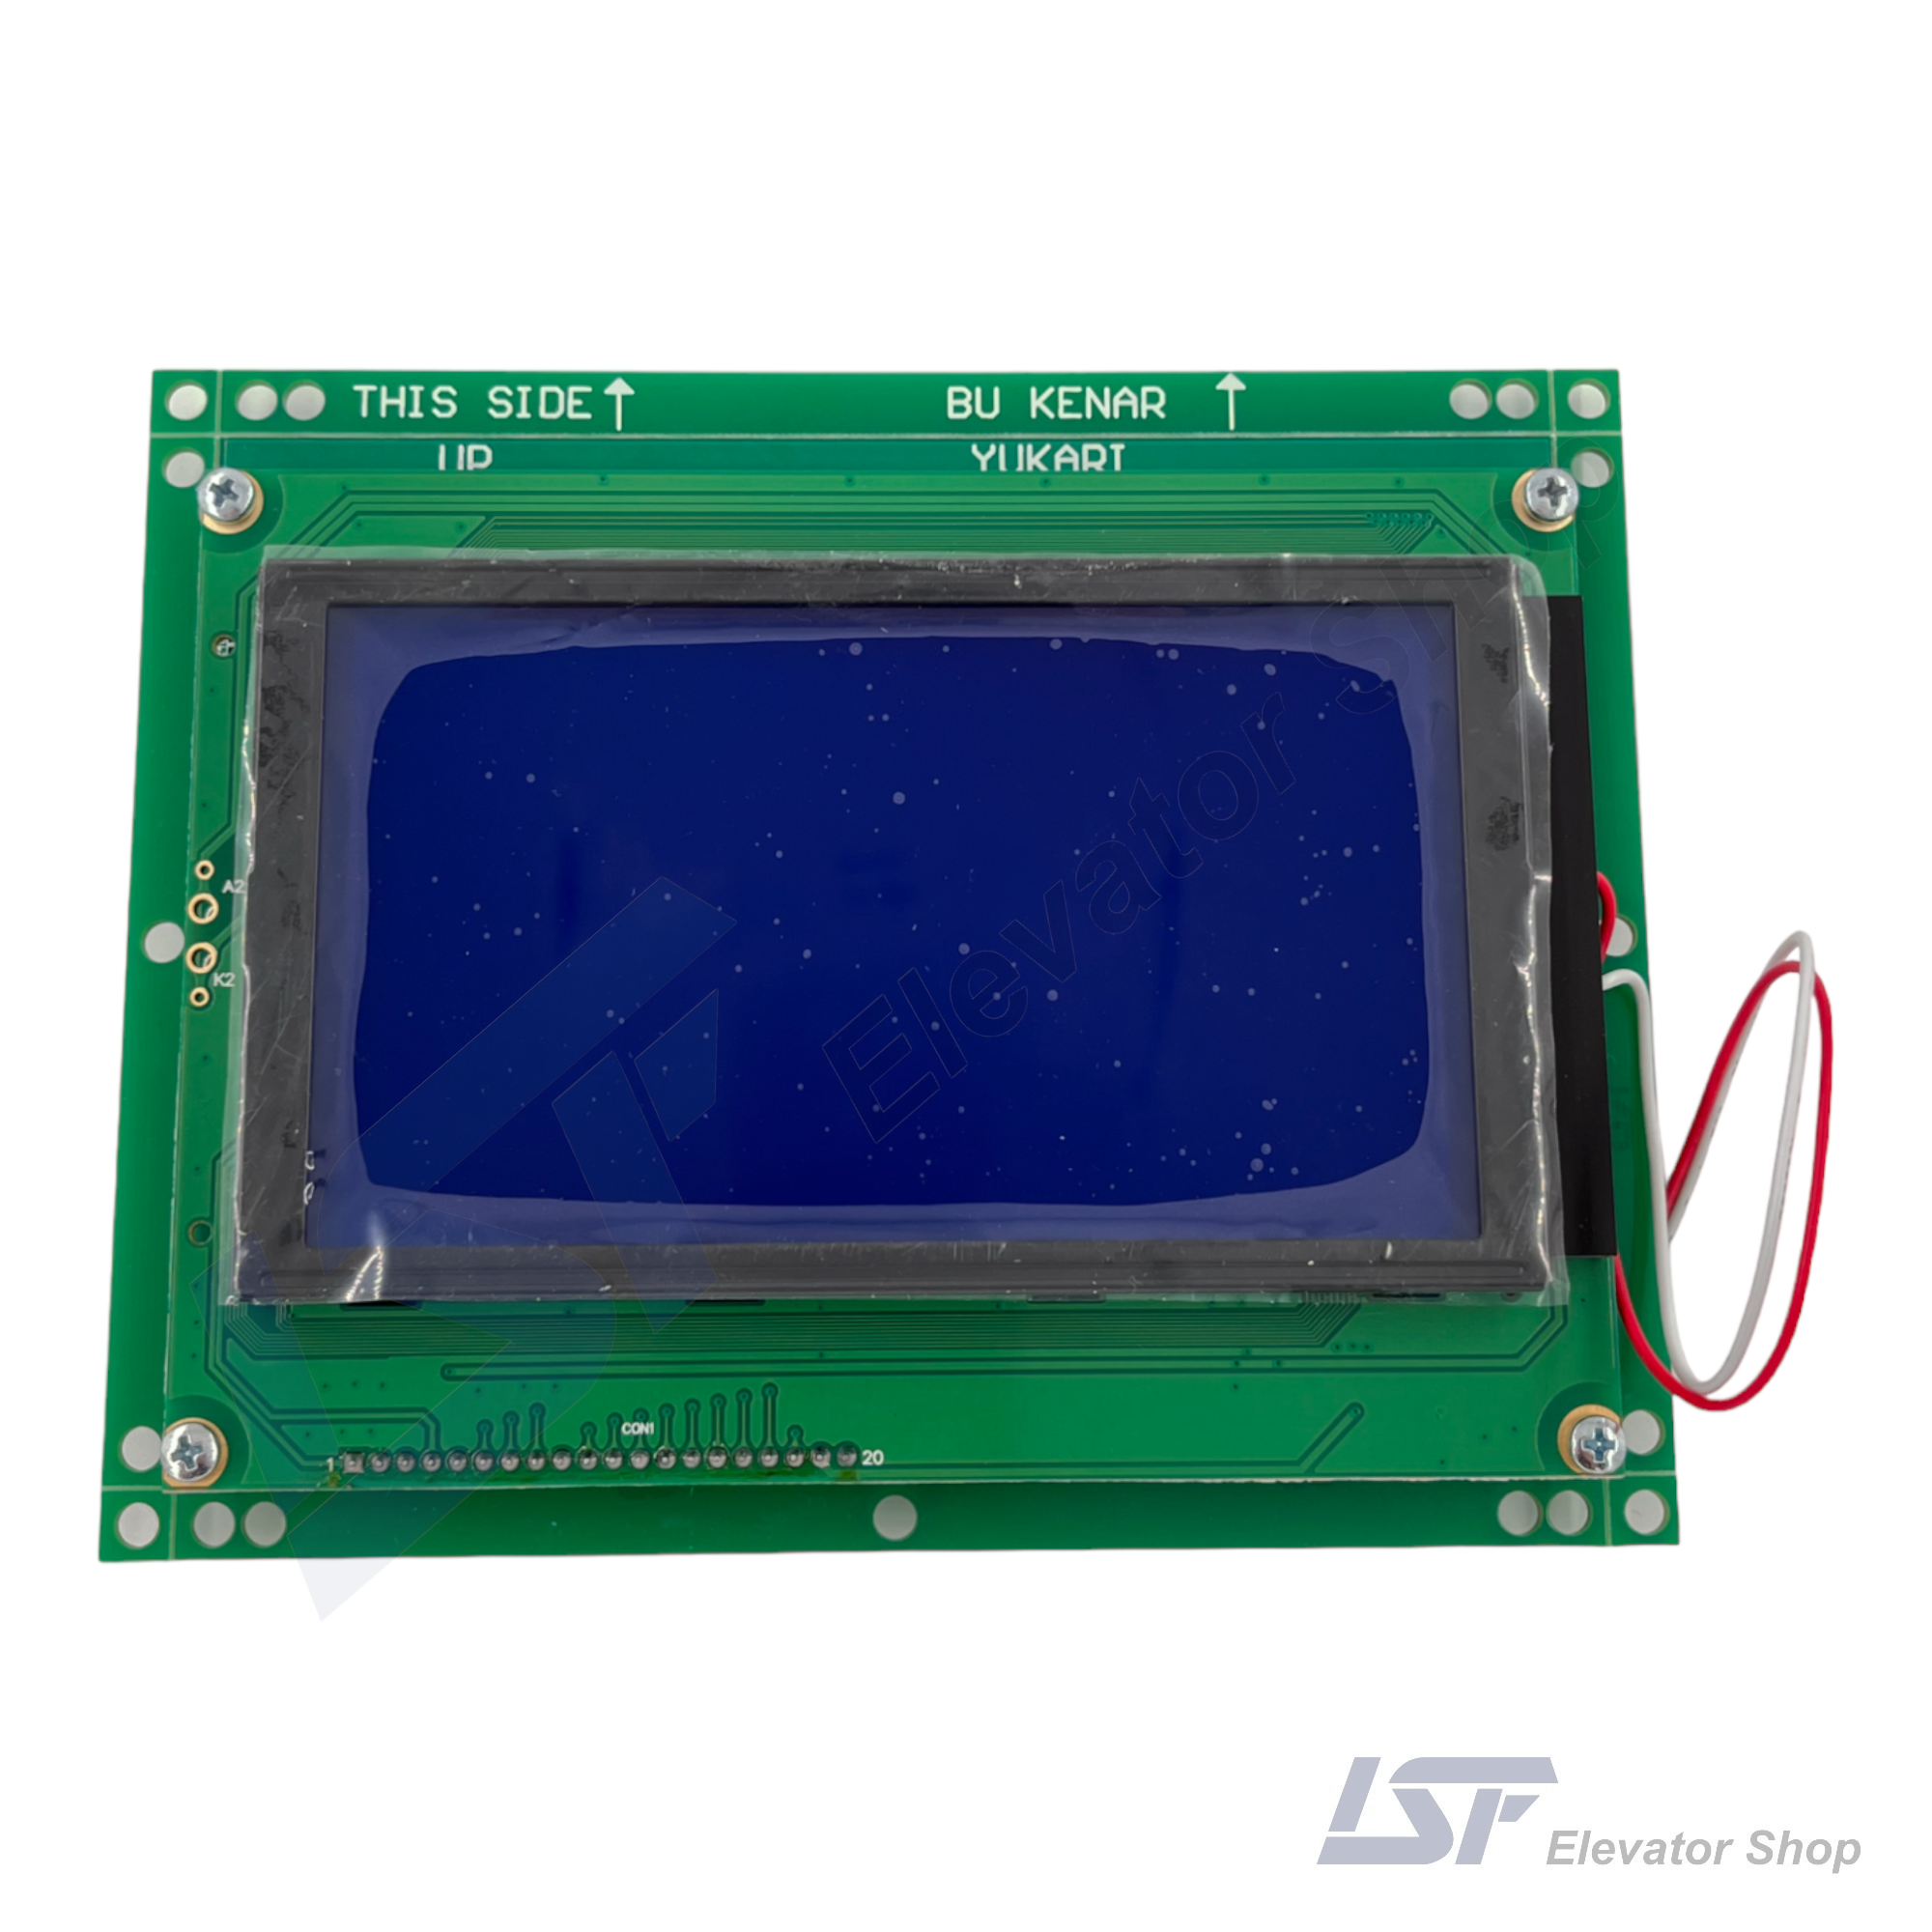 LCD240X128A-S Arkel Indicator Unit (240x128 Pixel 114x64 mm LCD) at ISF Elevator Shop